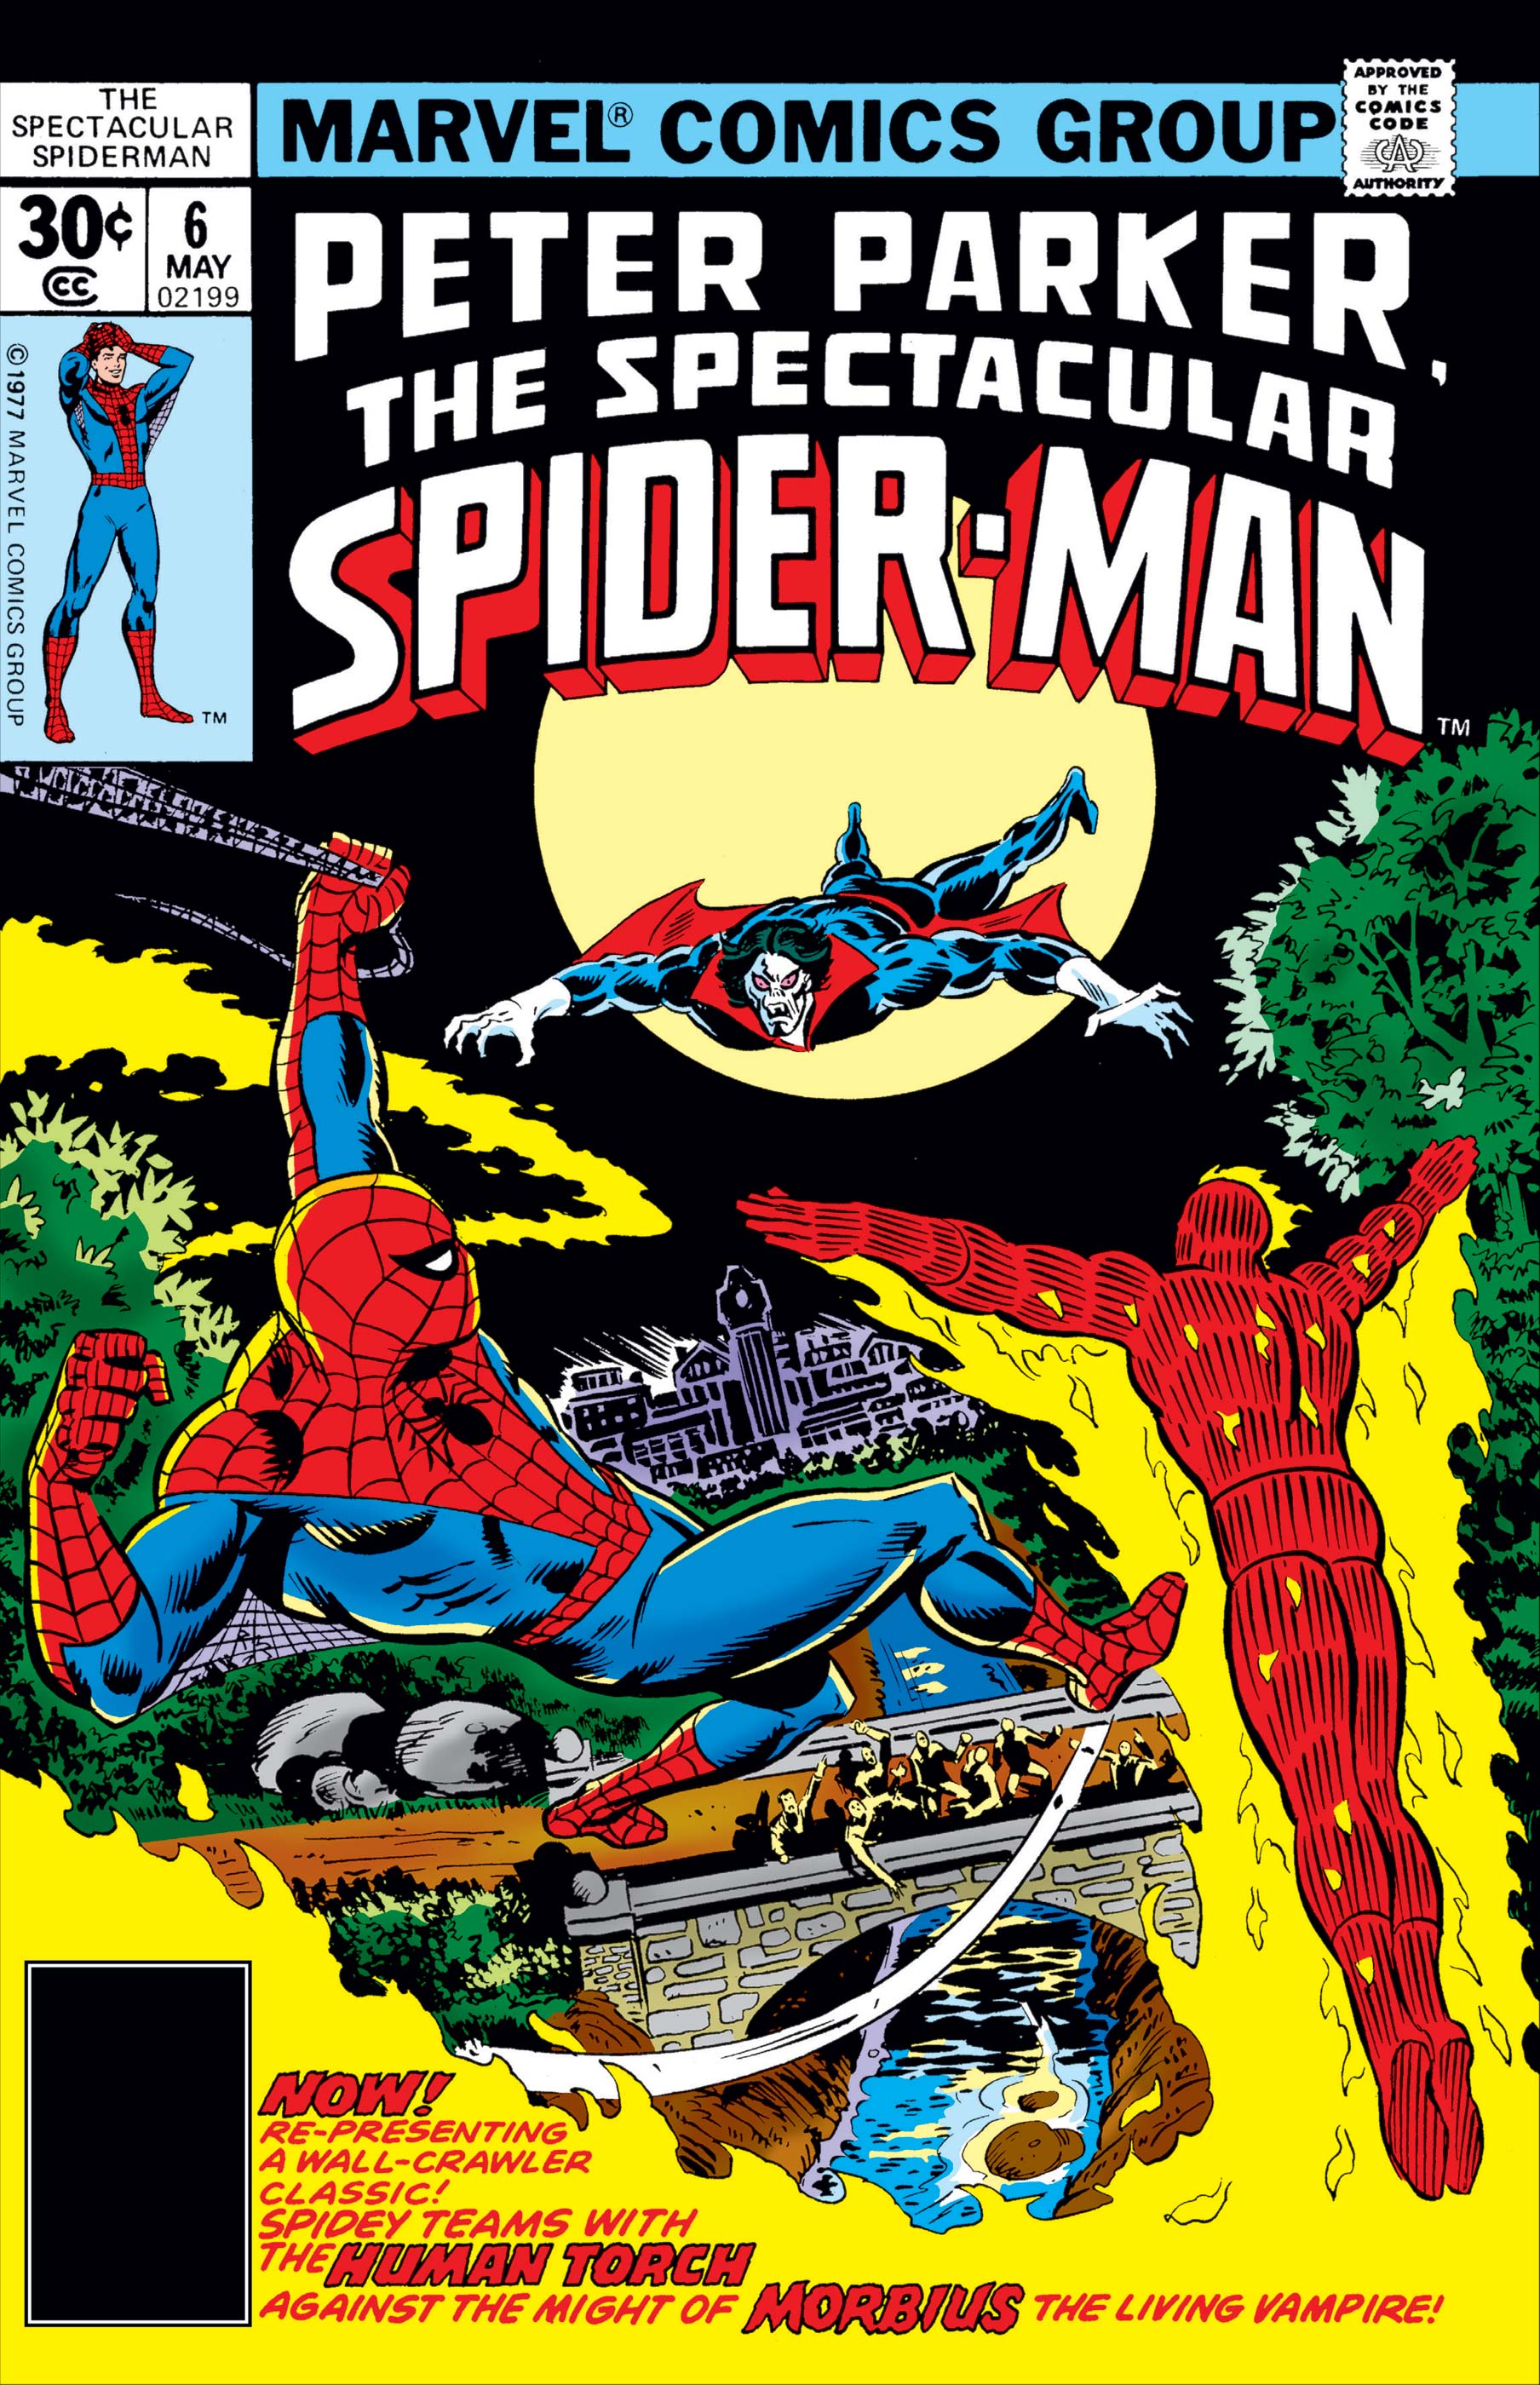 Peter parker the spectacular spider-man #6